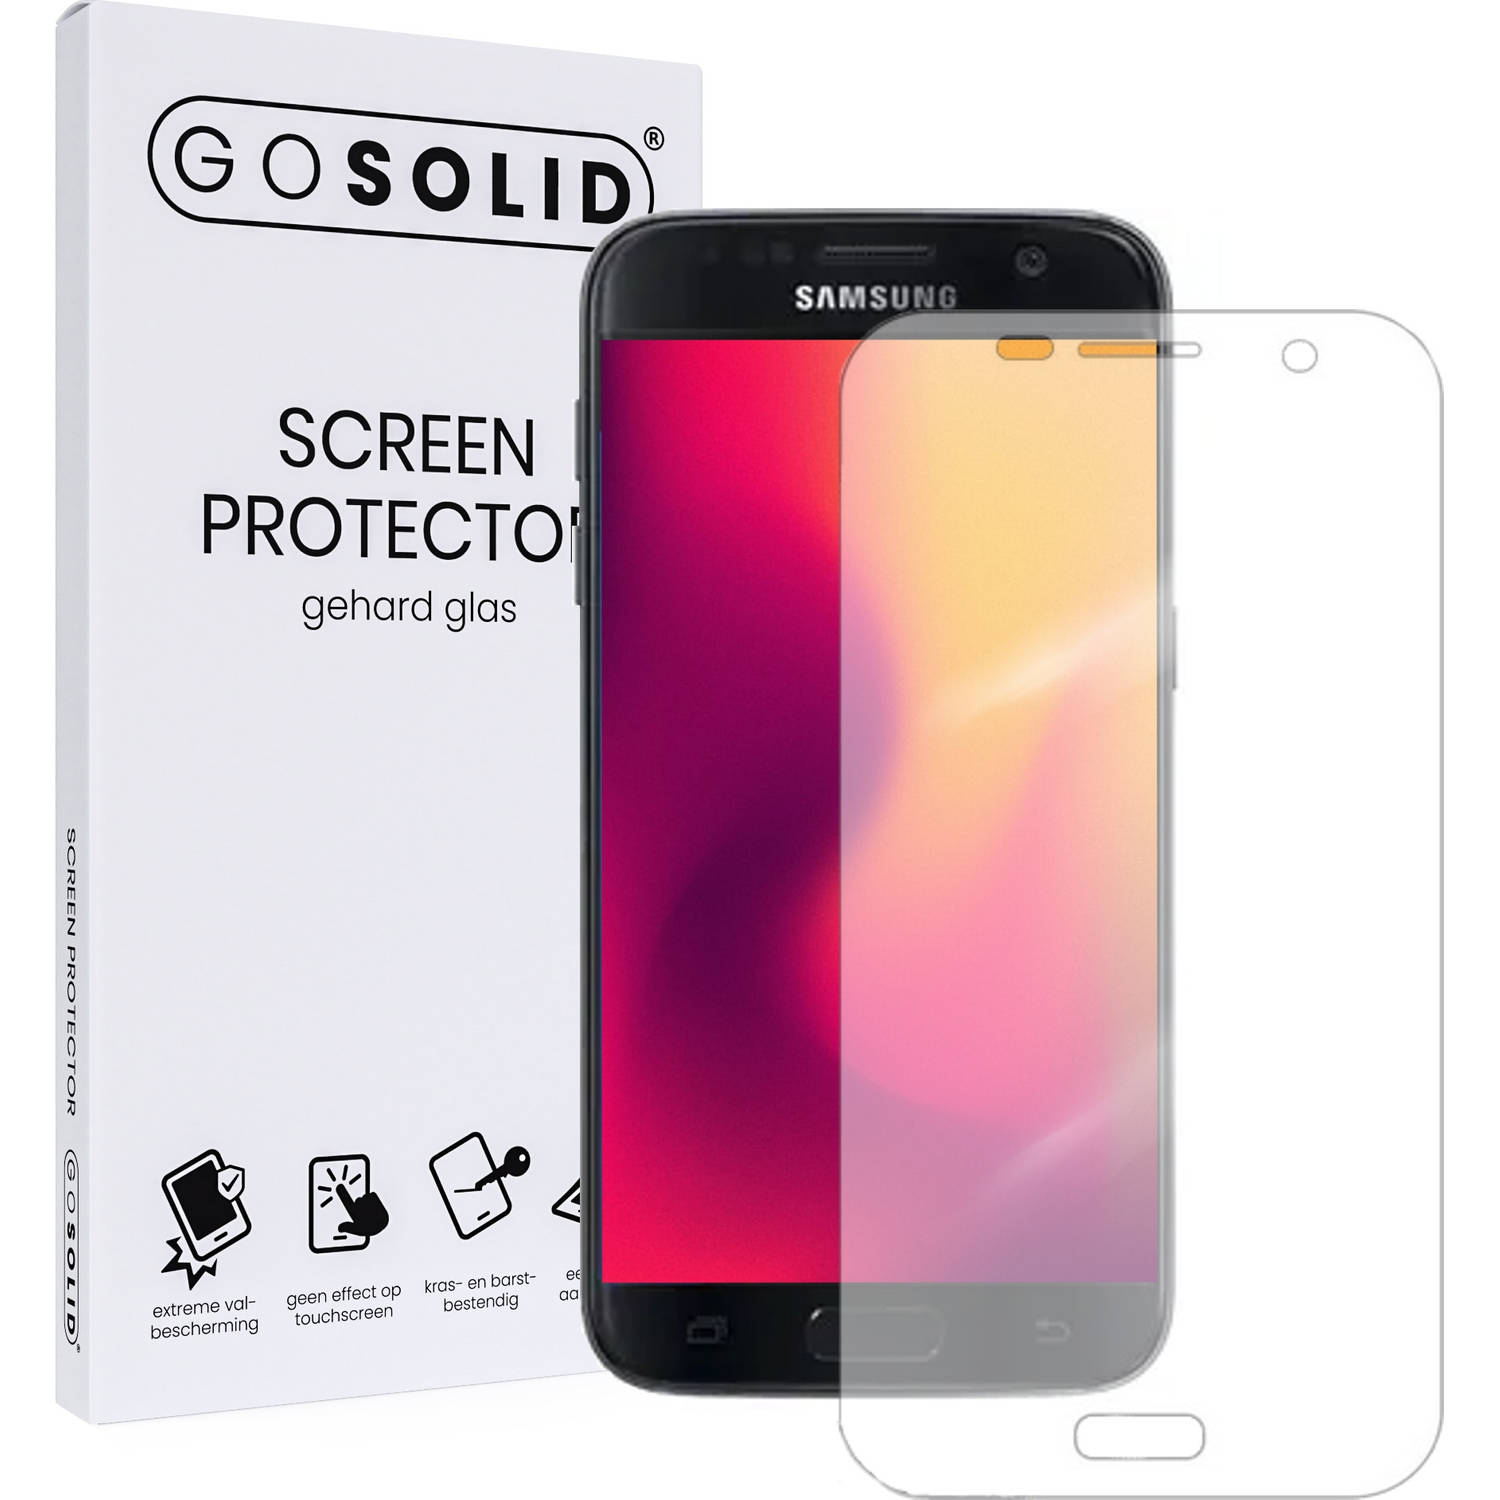 GO SOLID! ® screenprotector Samsung Galaxy S7 Edge - gehard glas